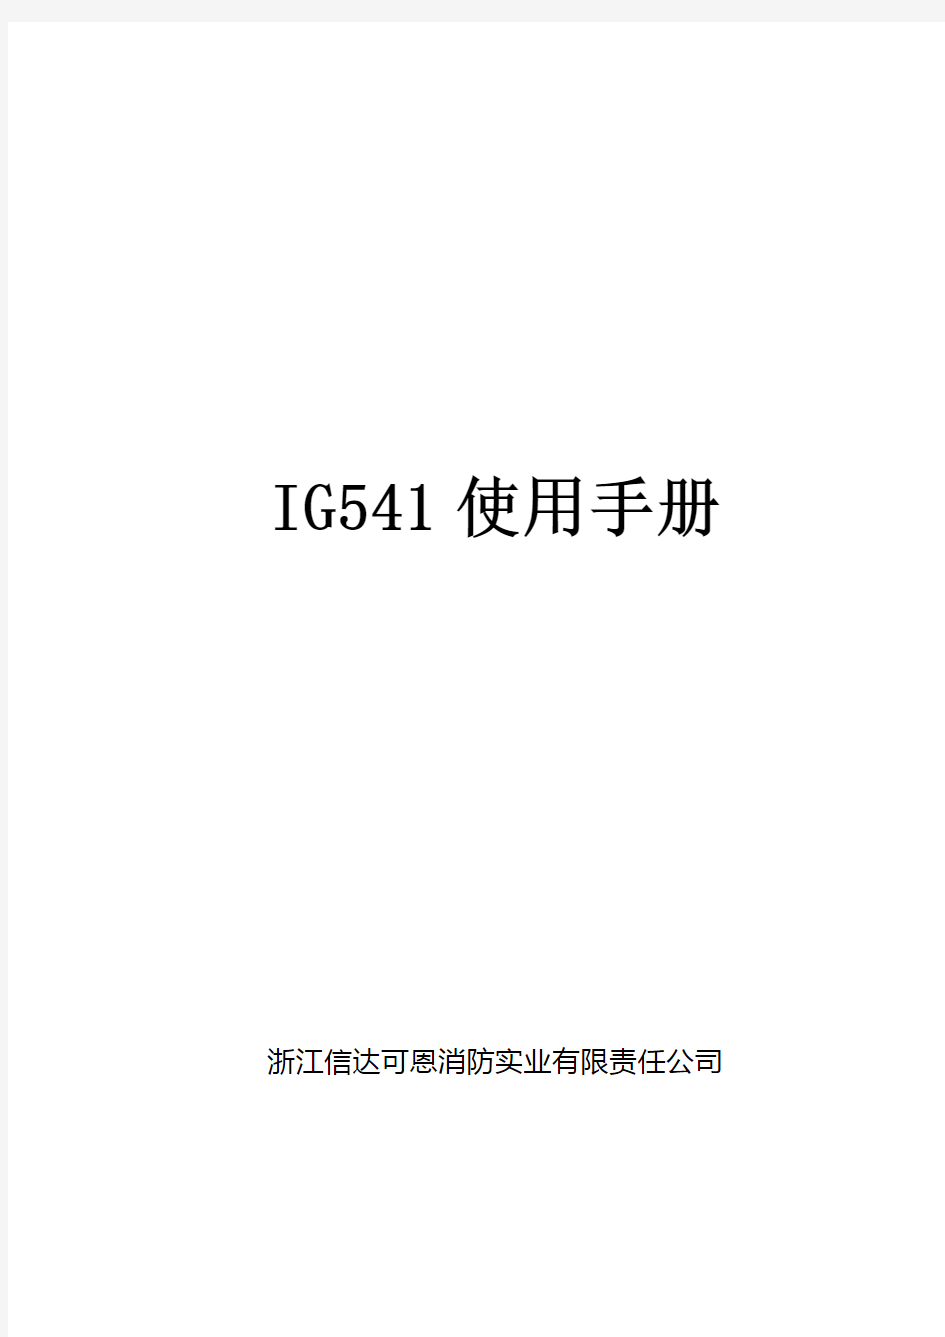 IG541使用手册